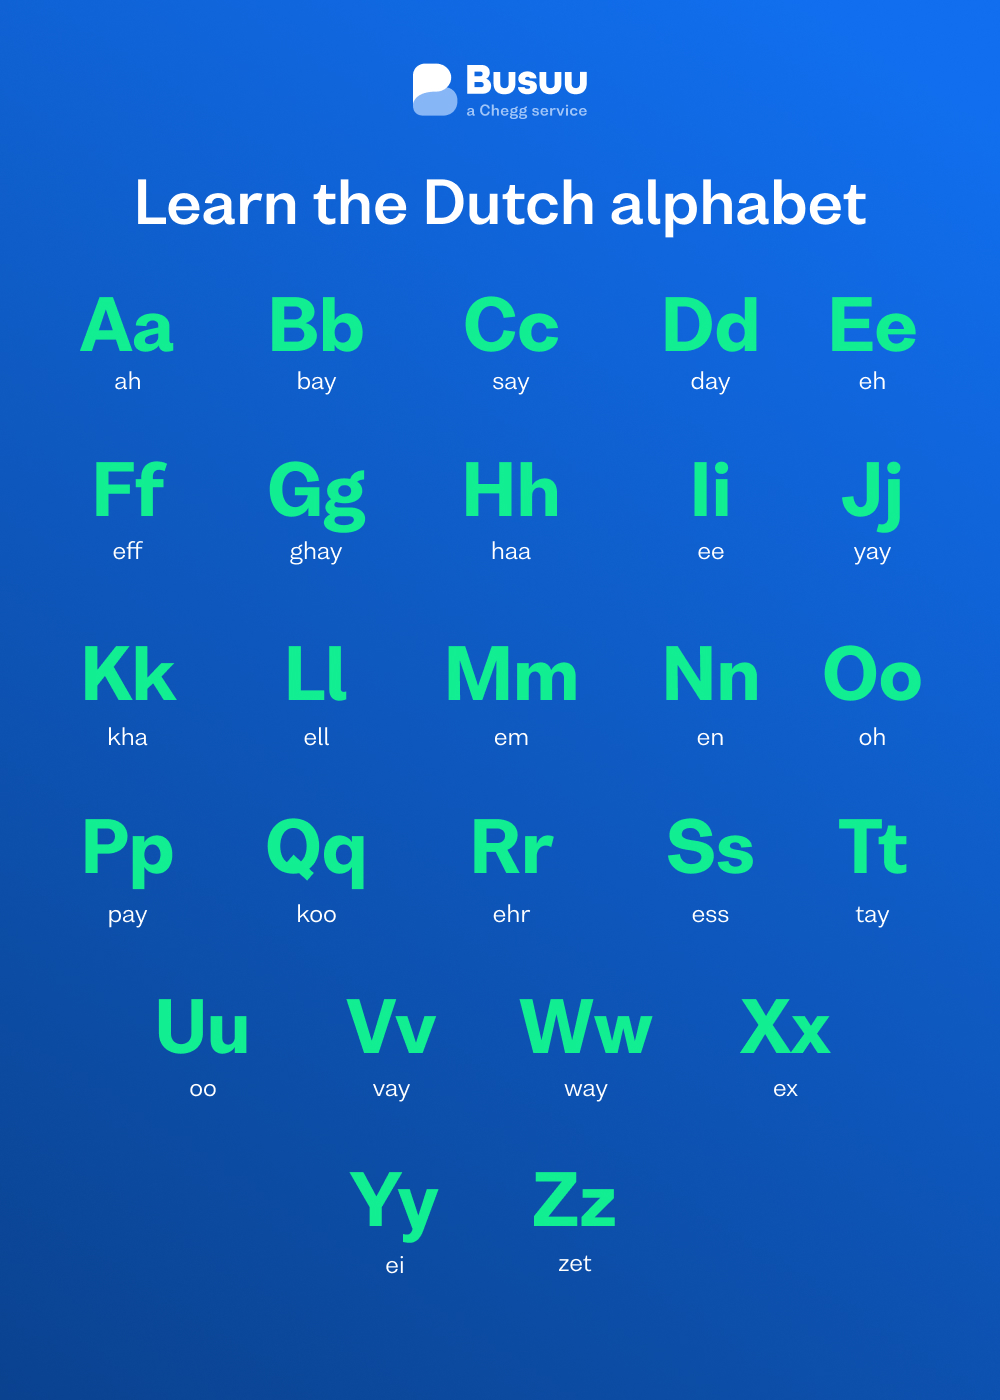 Dutch alphabet chart, courtesy of language-learning app Busuu's Dutch alphabet guide